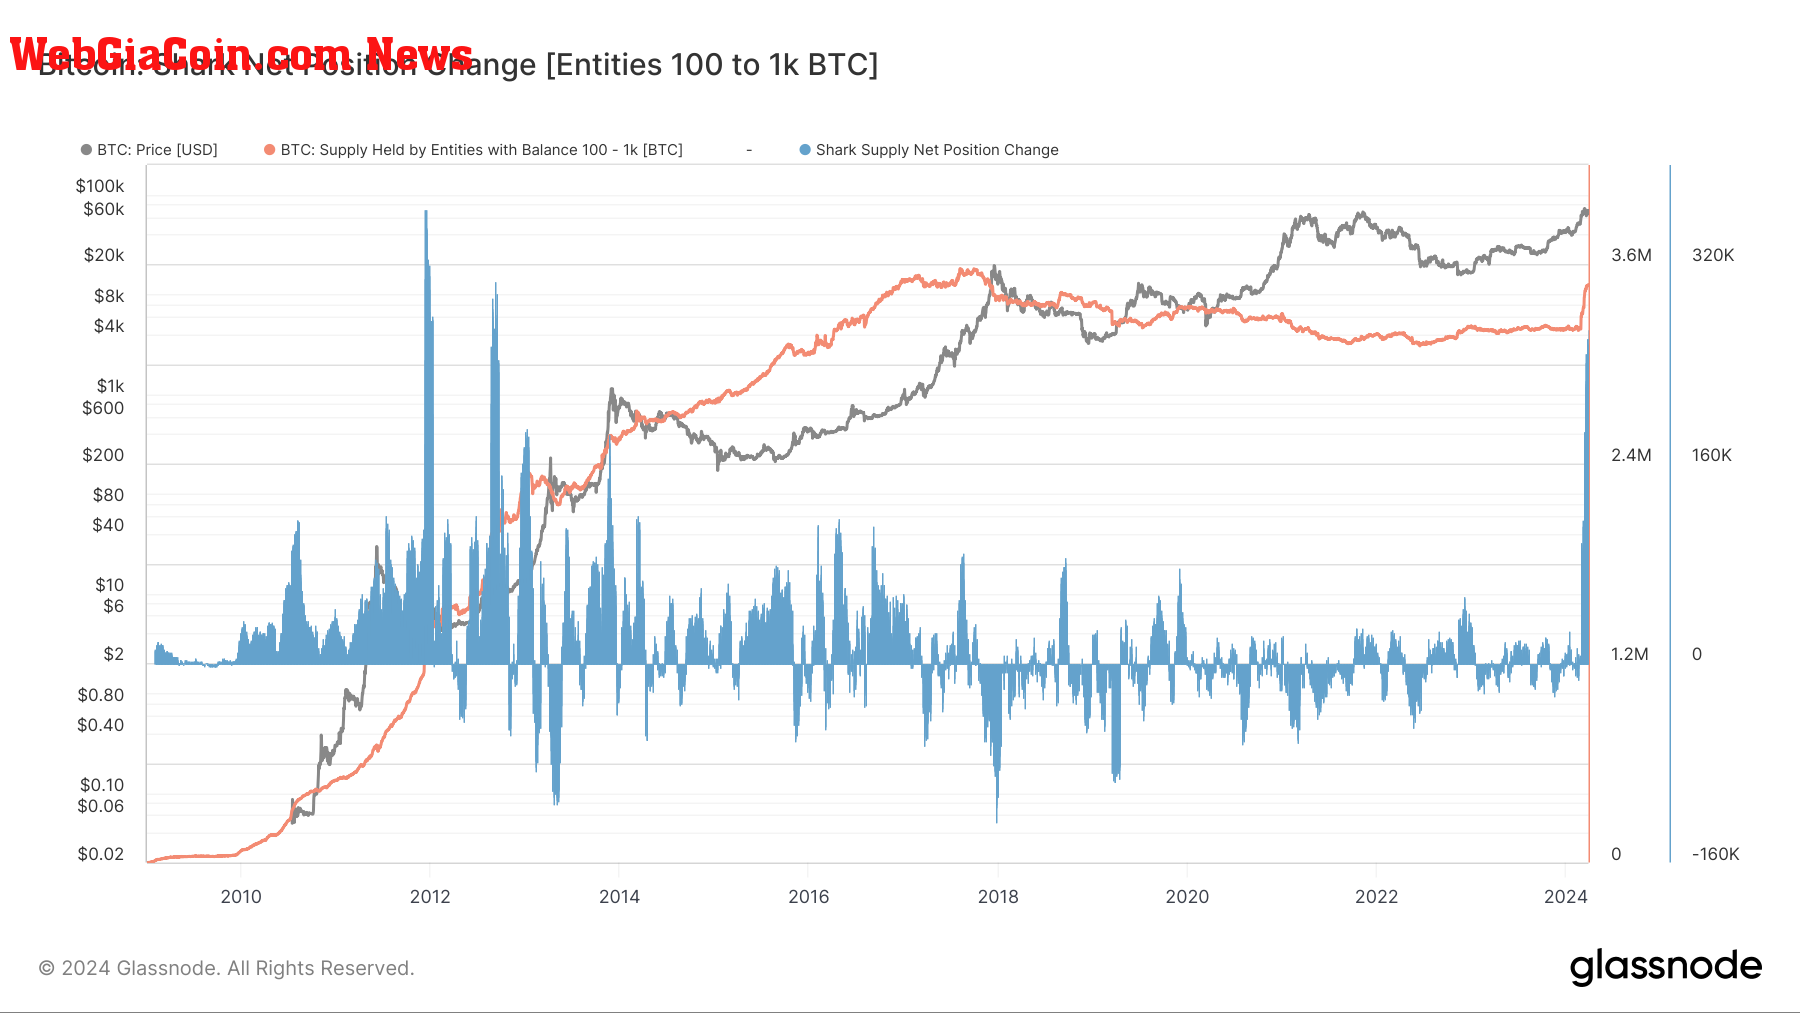 Shark Net Position Change (Entities 100 to 1k Bitcoin): (Source: Glassnode)